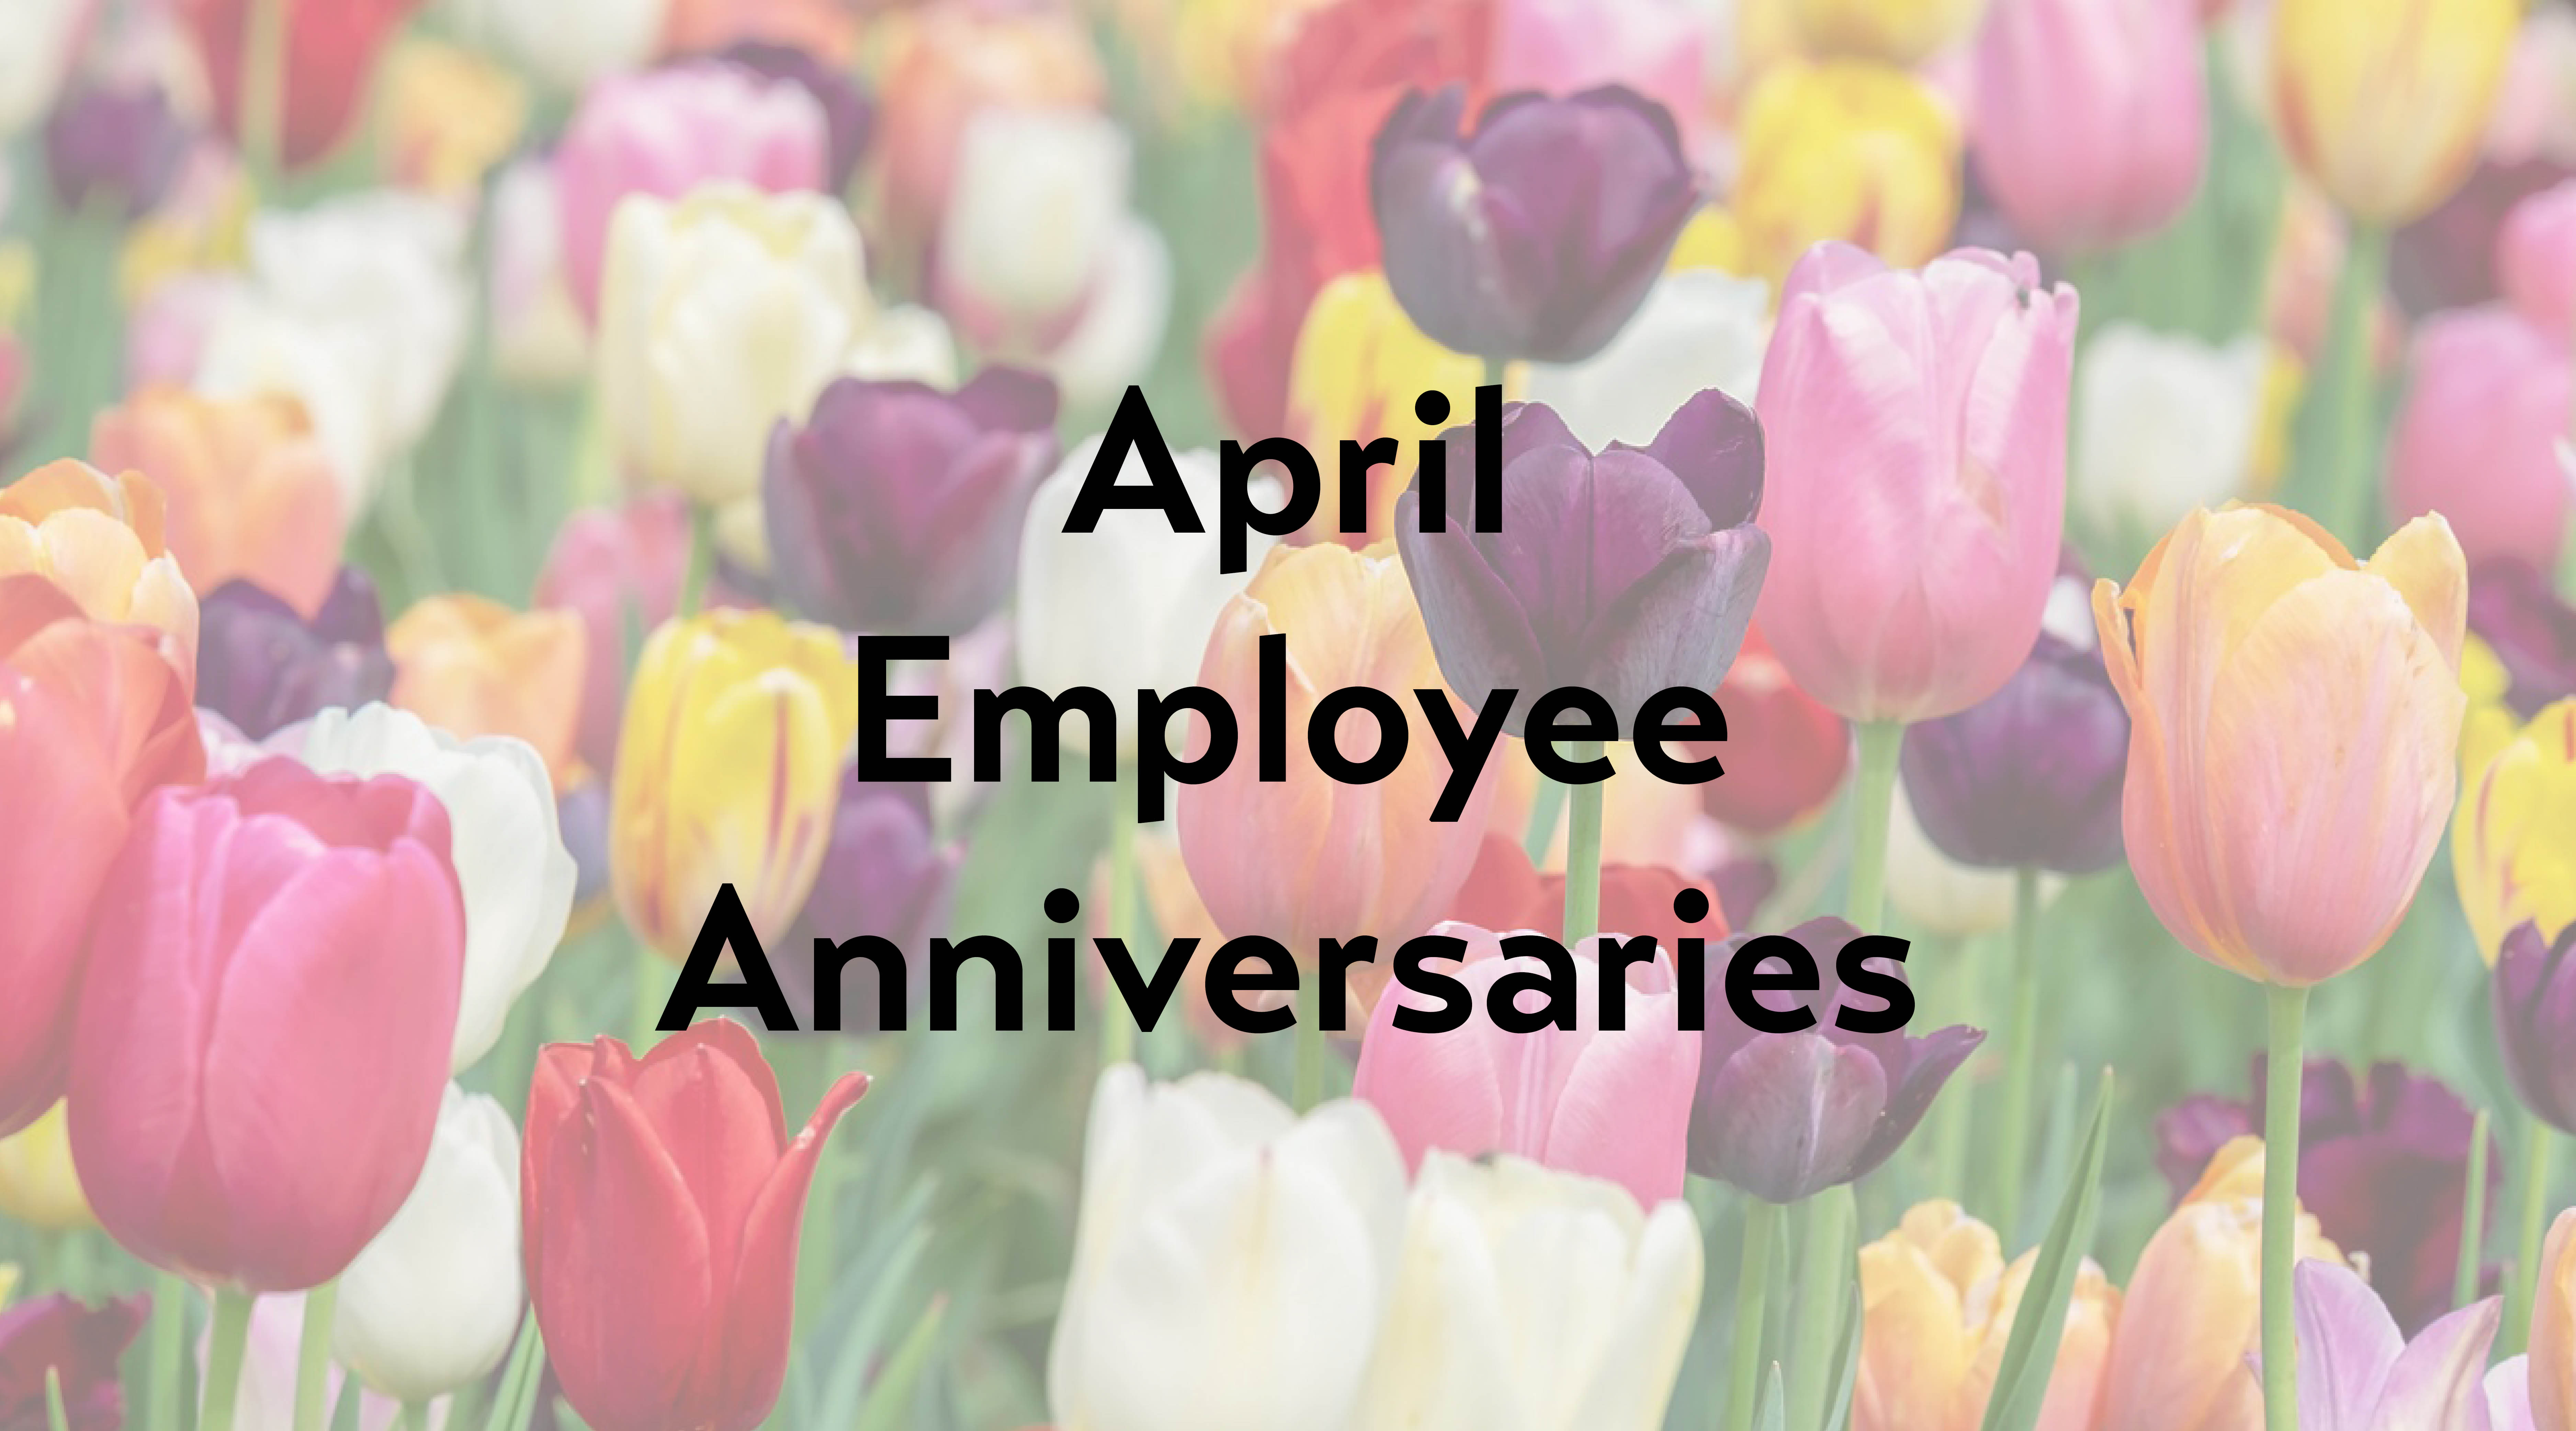 April Employee Anniversaries